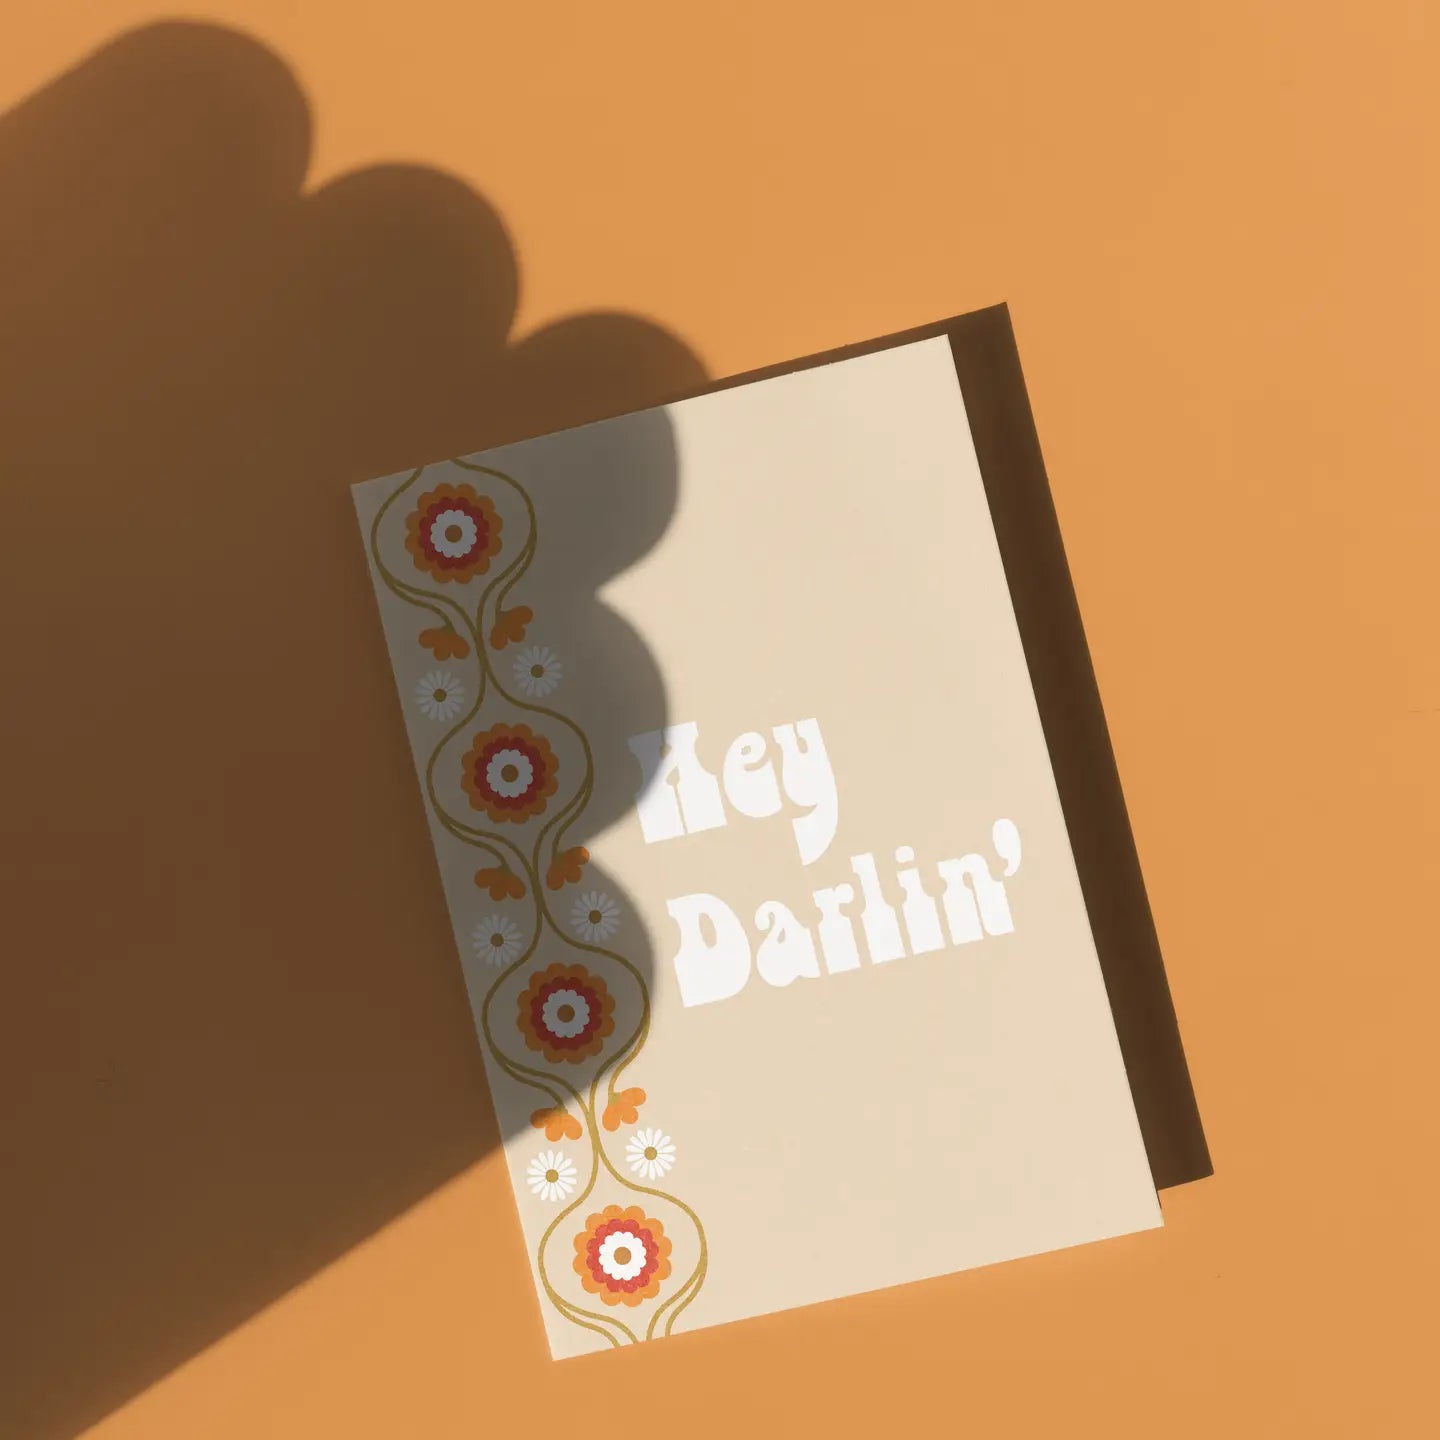 Hey Darlin' Greeting Card